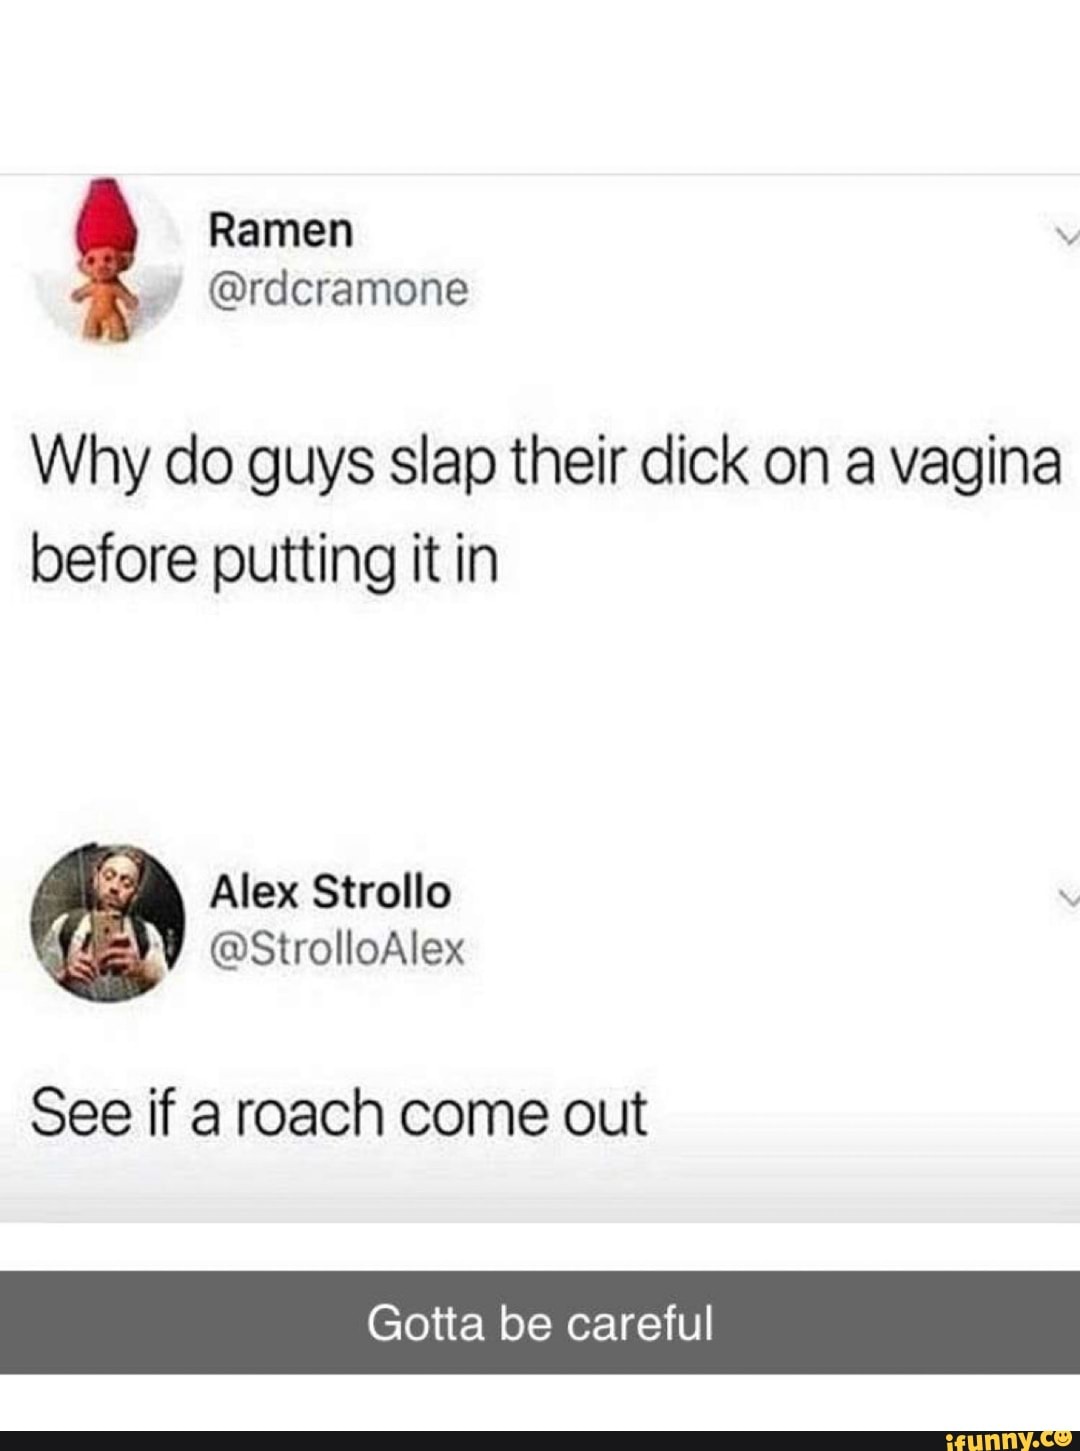 Why do guys slap their dicks on pussy